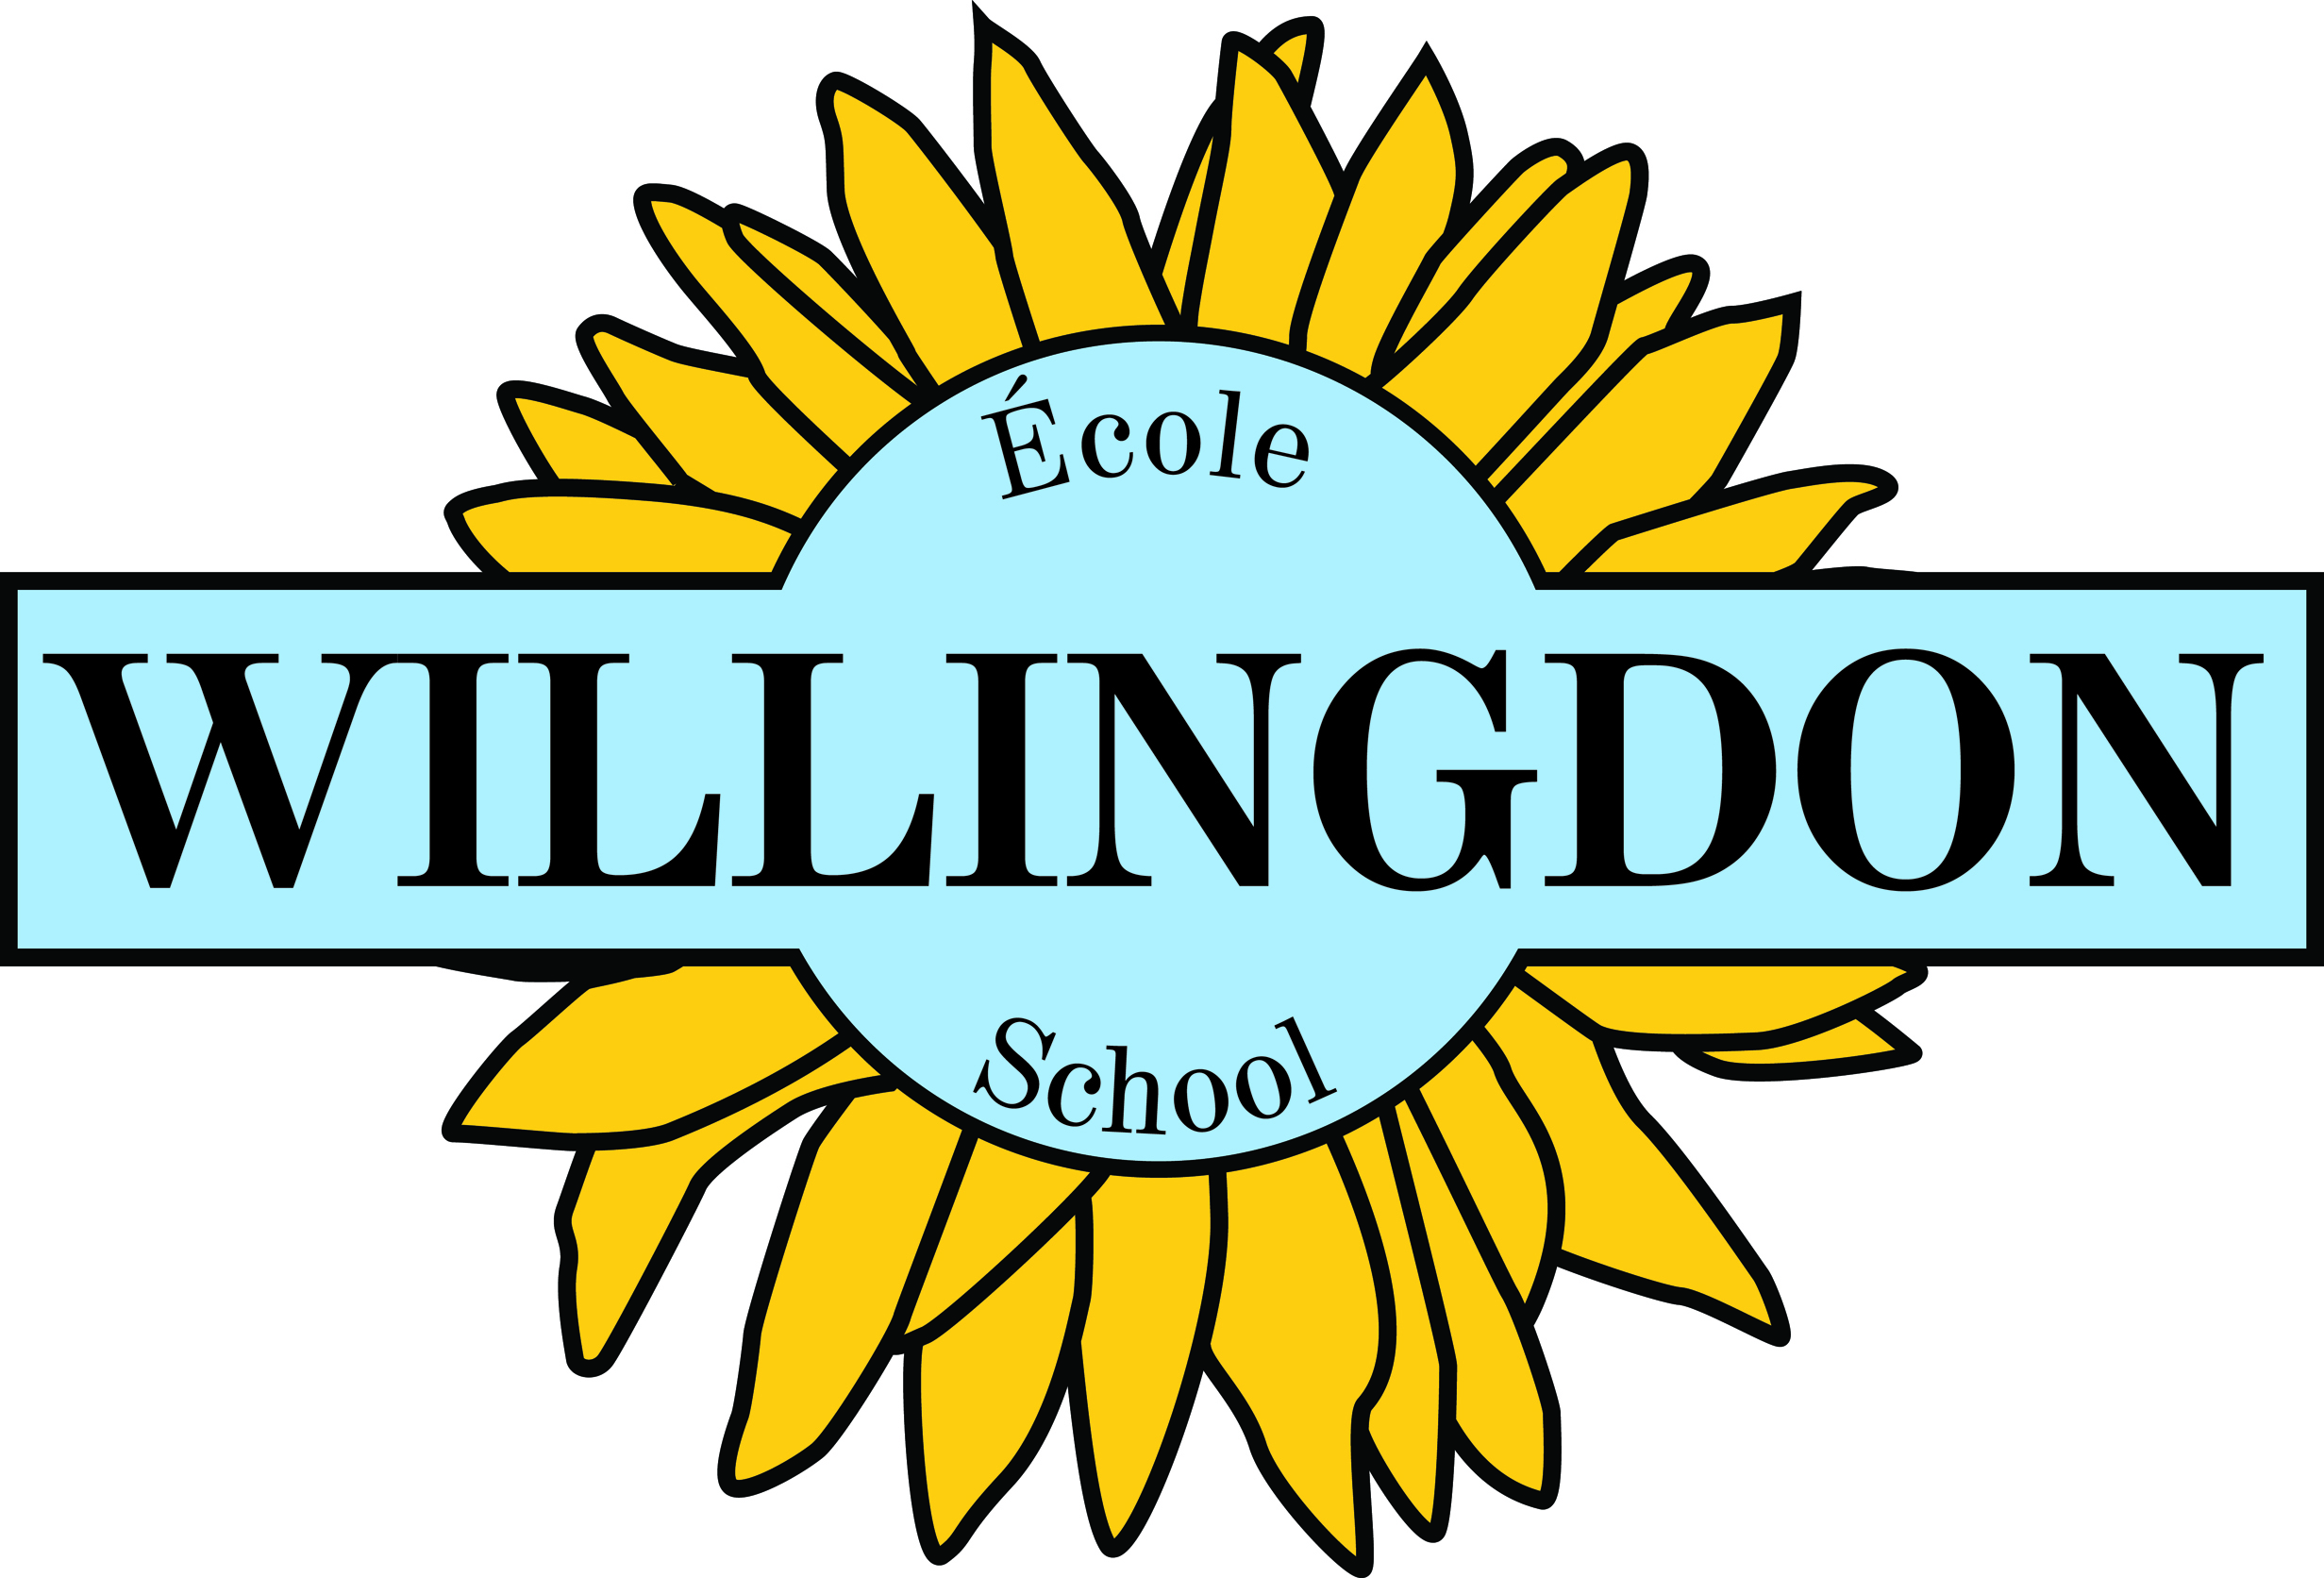 Willingdon school